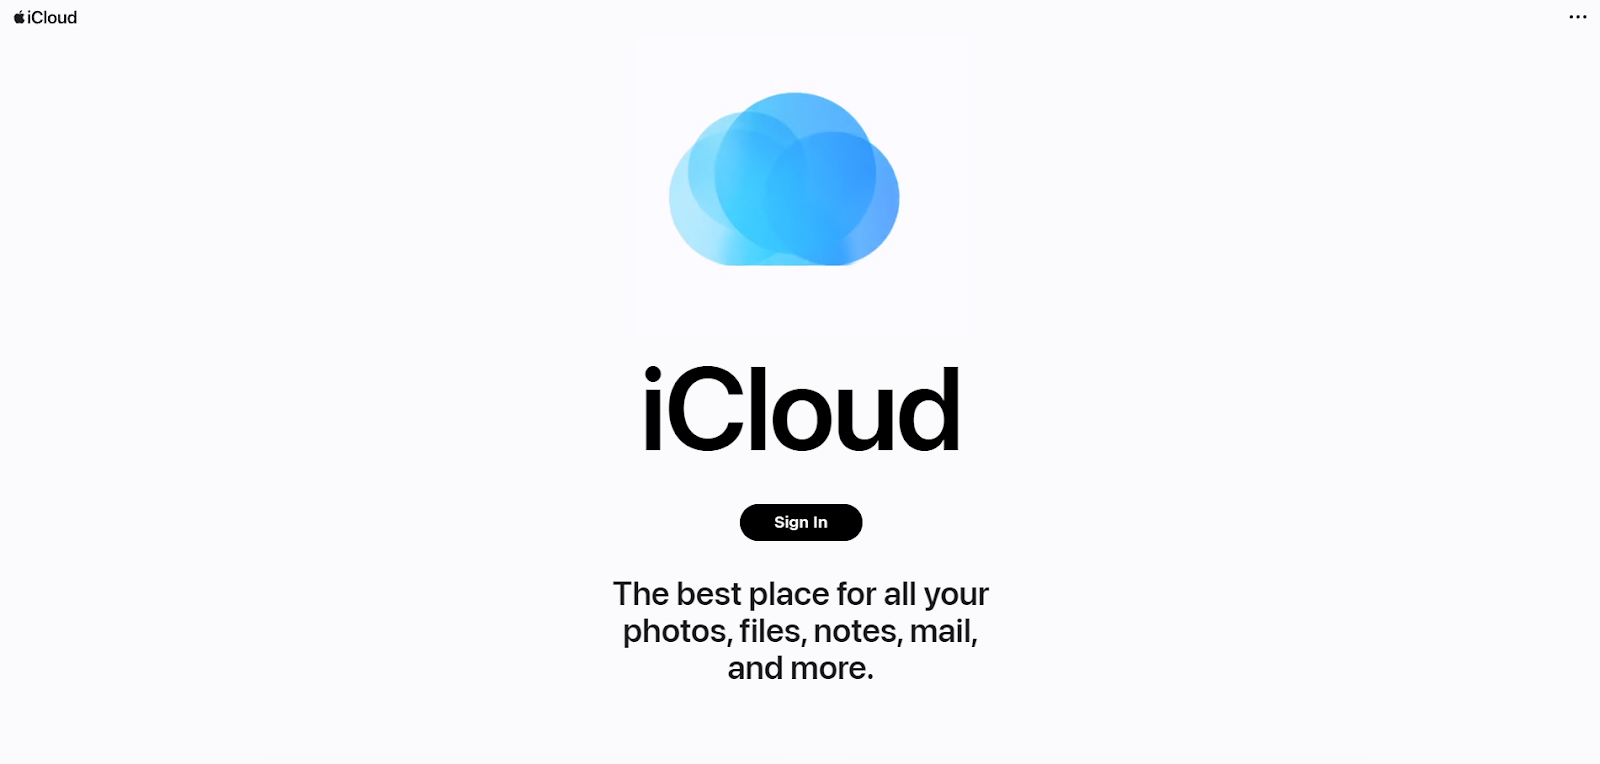 A screenshot of iCloud's website